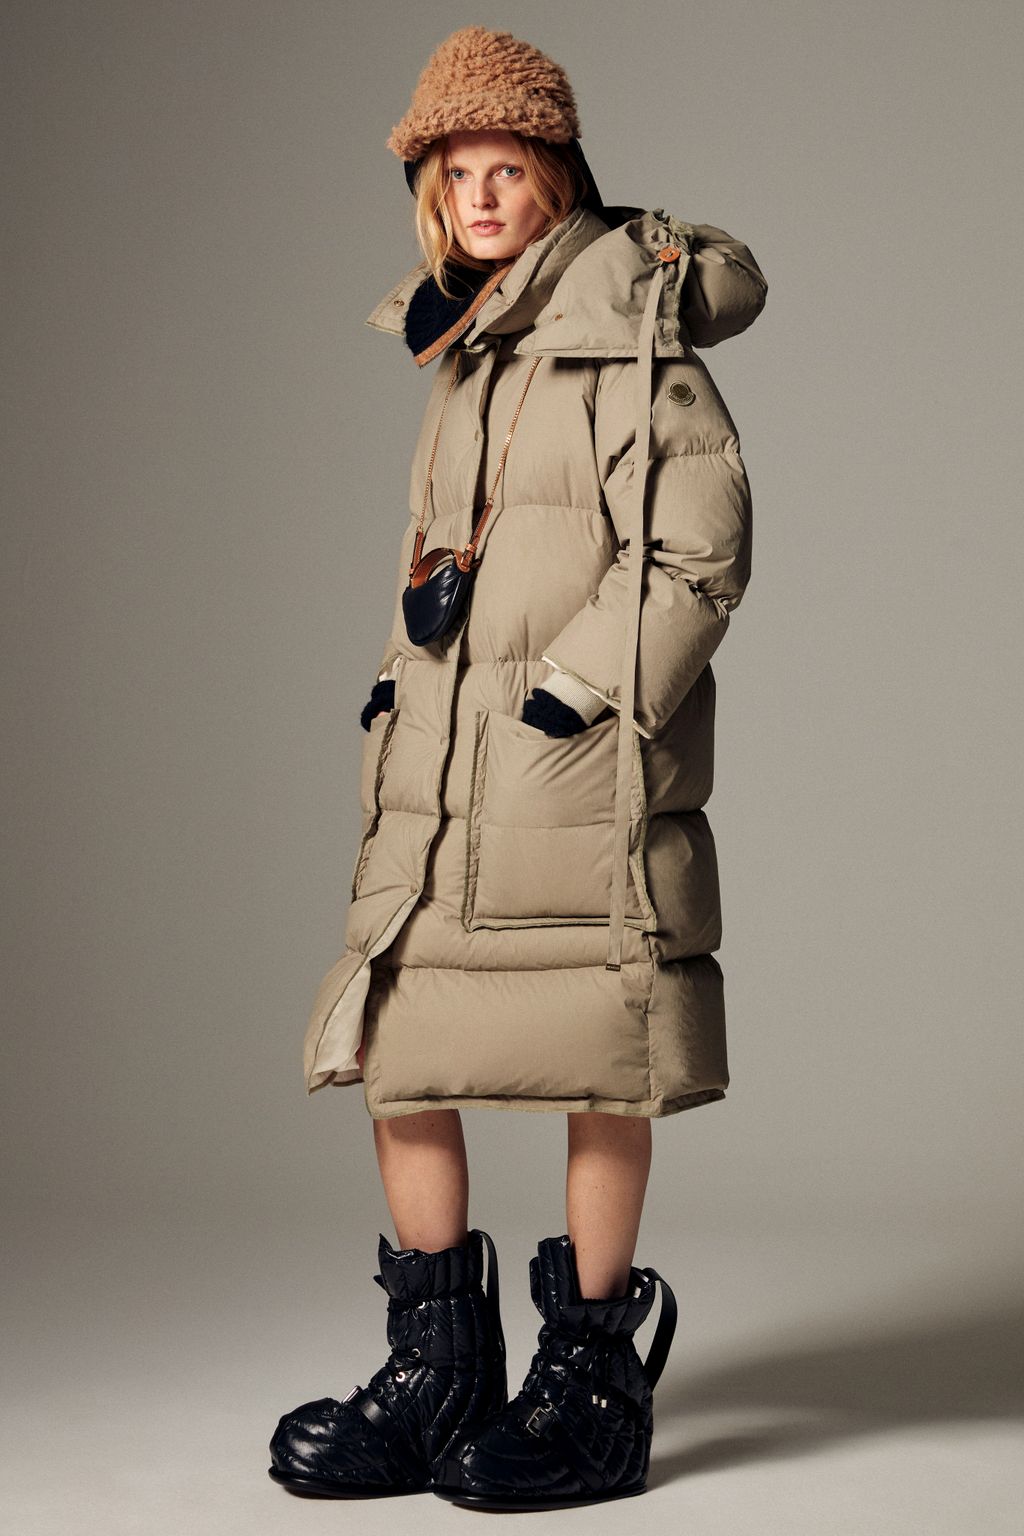 Louis Vuitton FW22 womenswear #9 - Tagwalk: The Fashion Search Engine